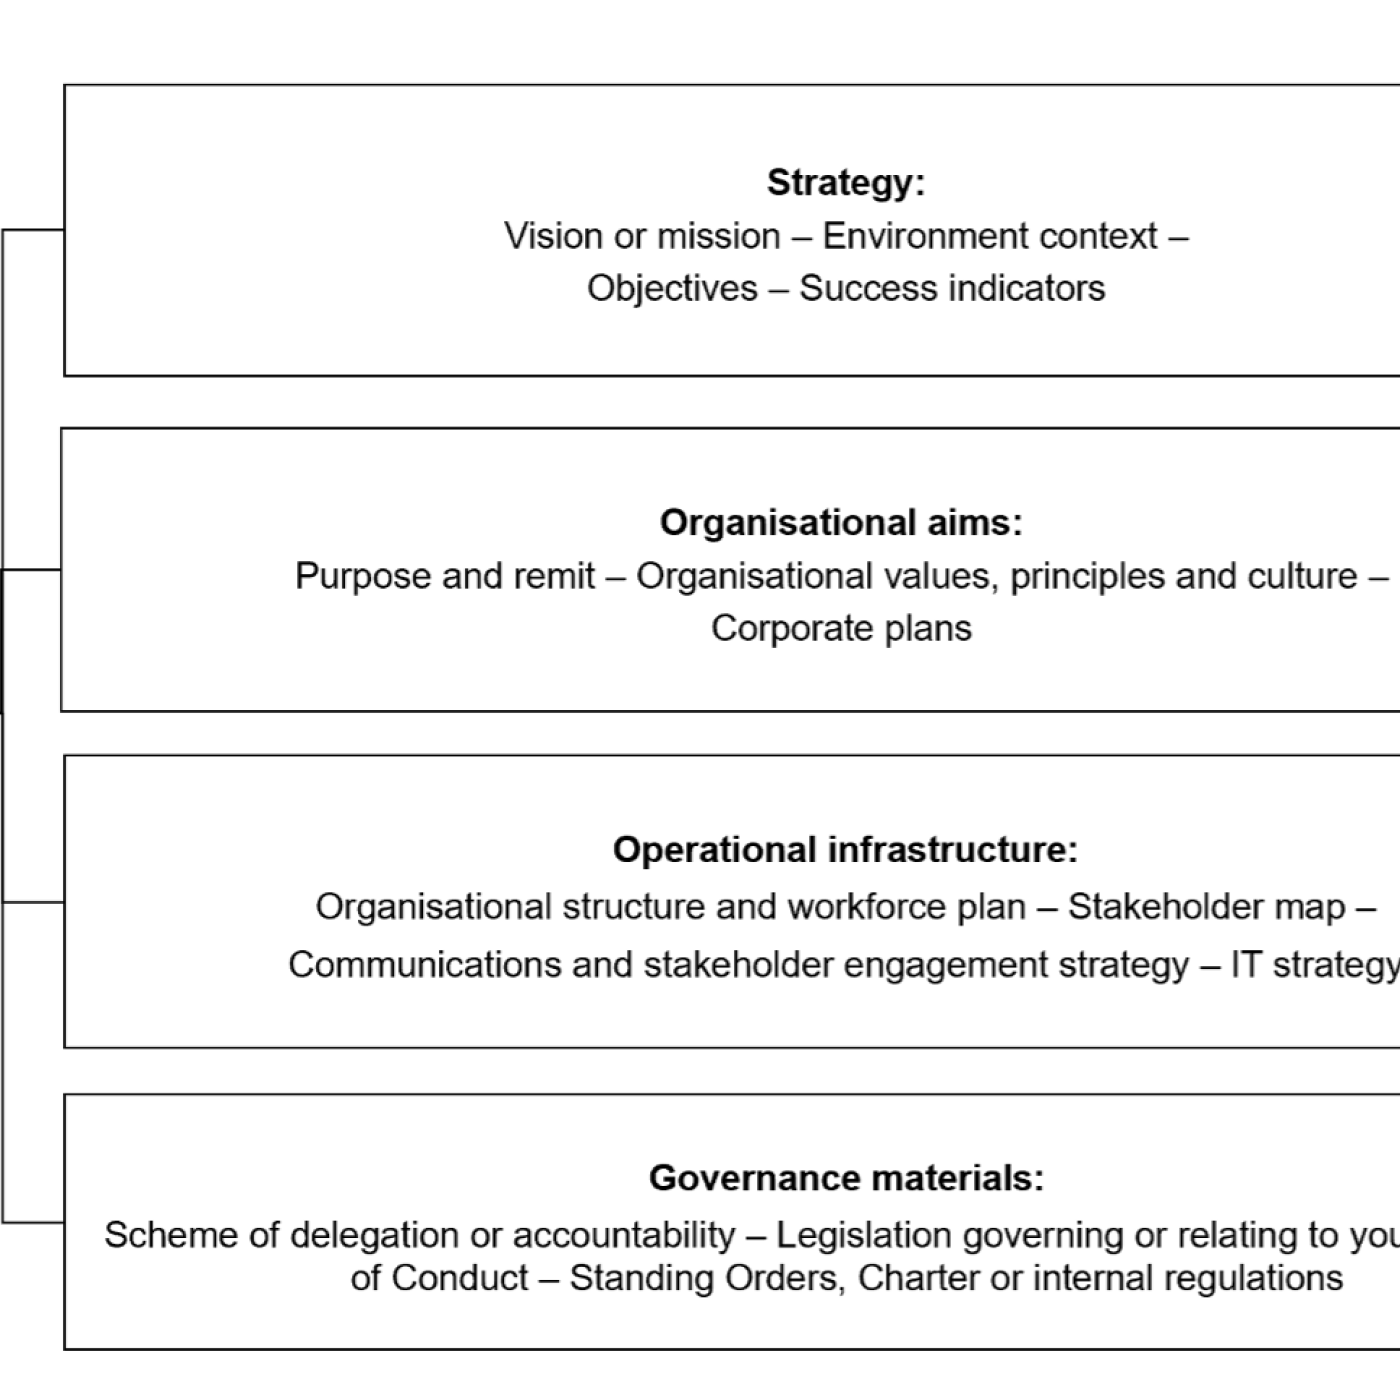 Strategic framework